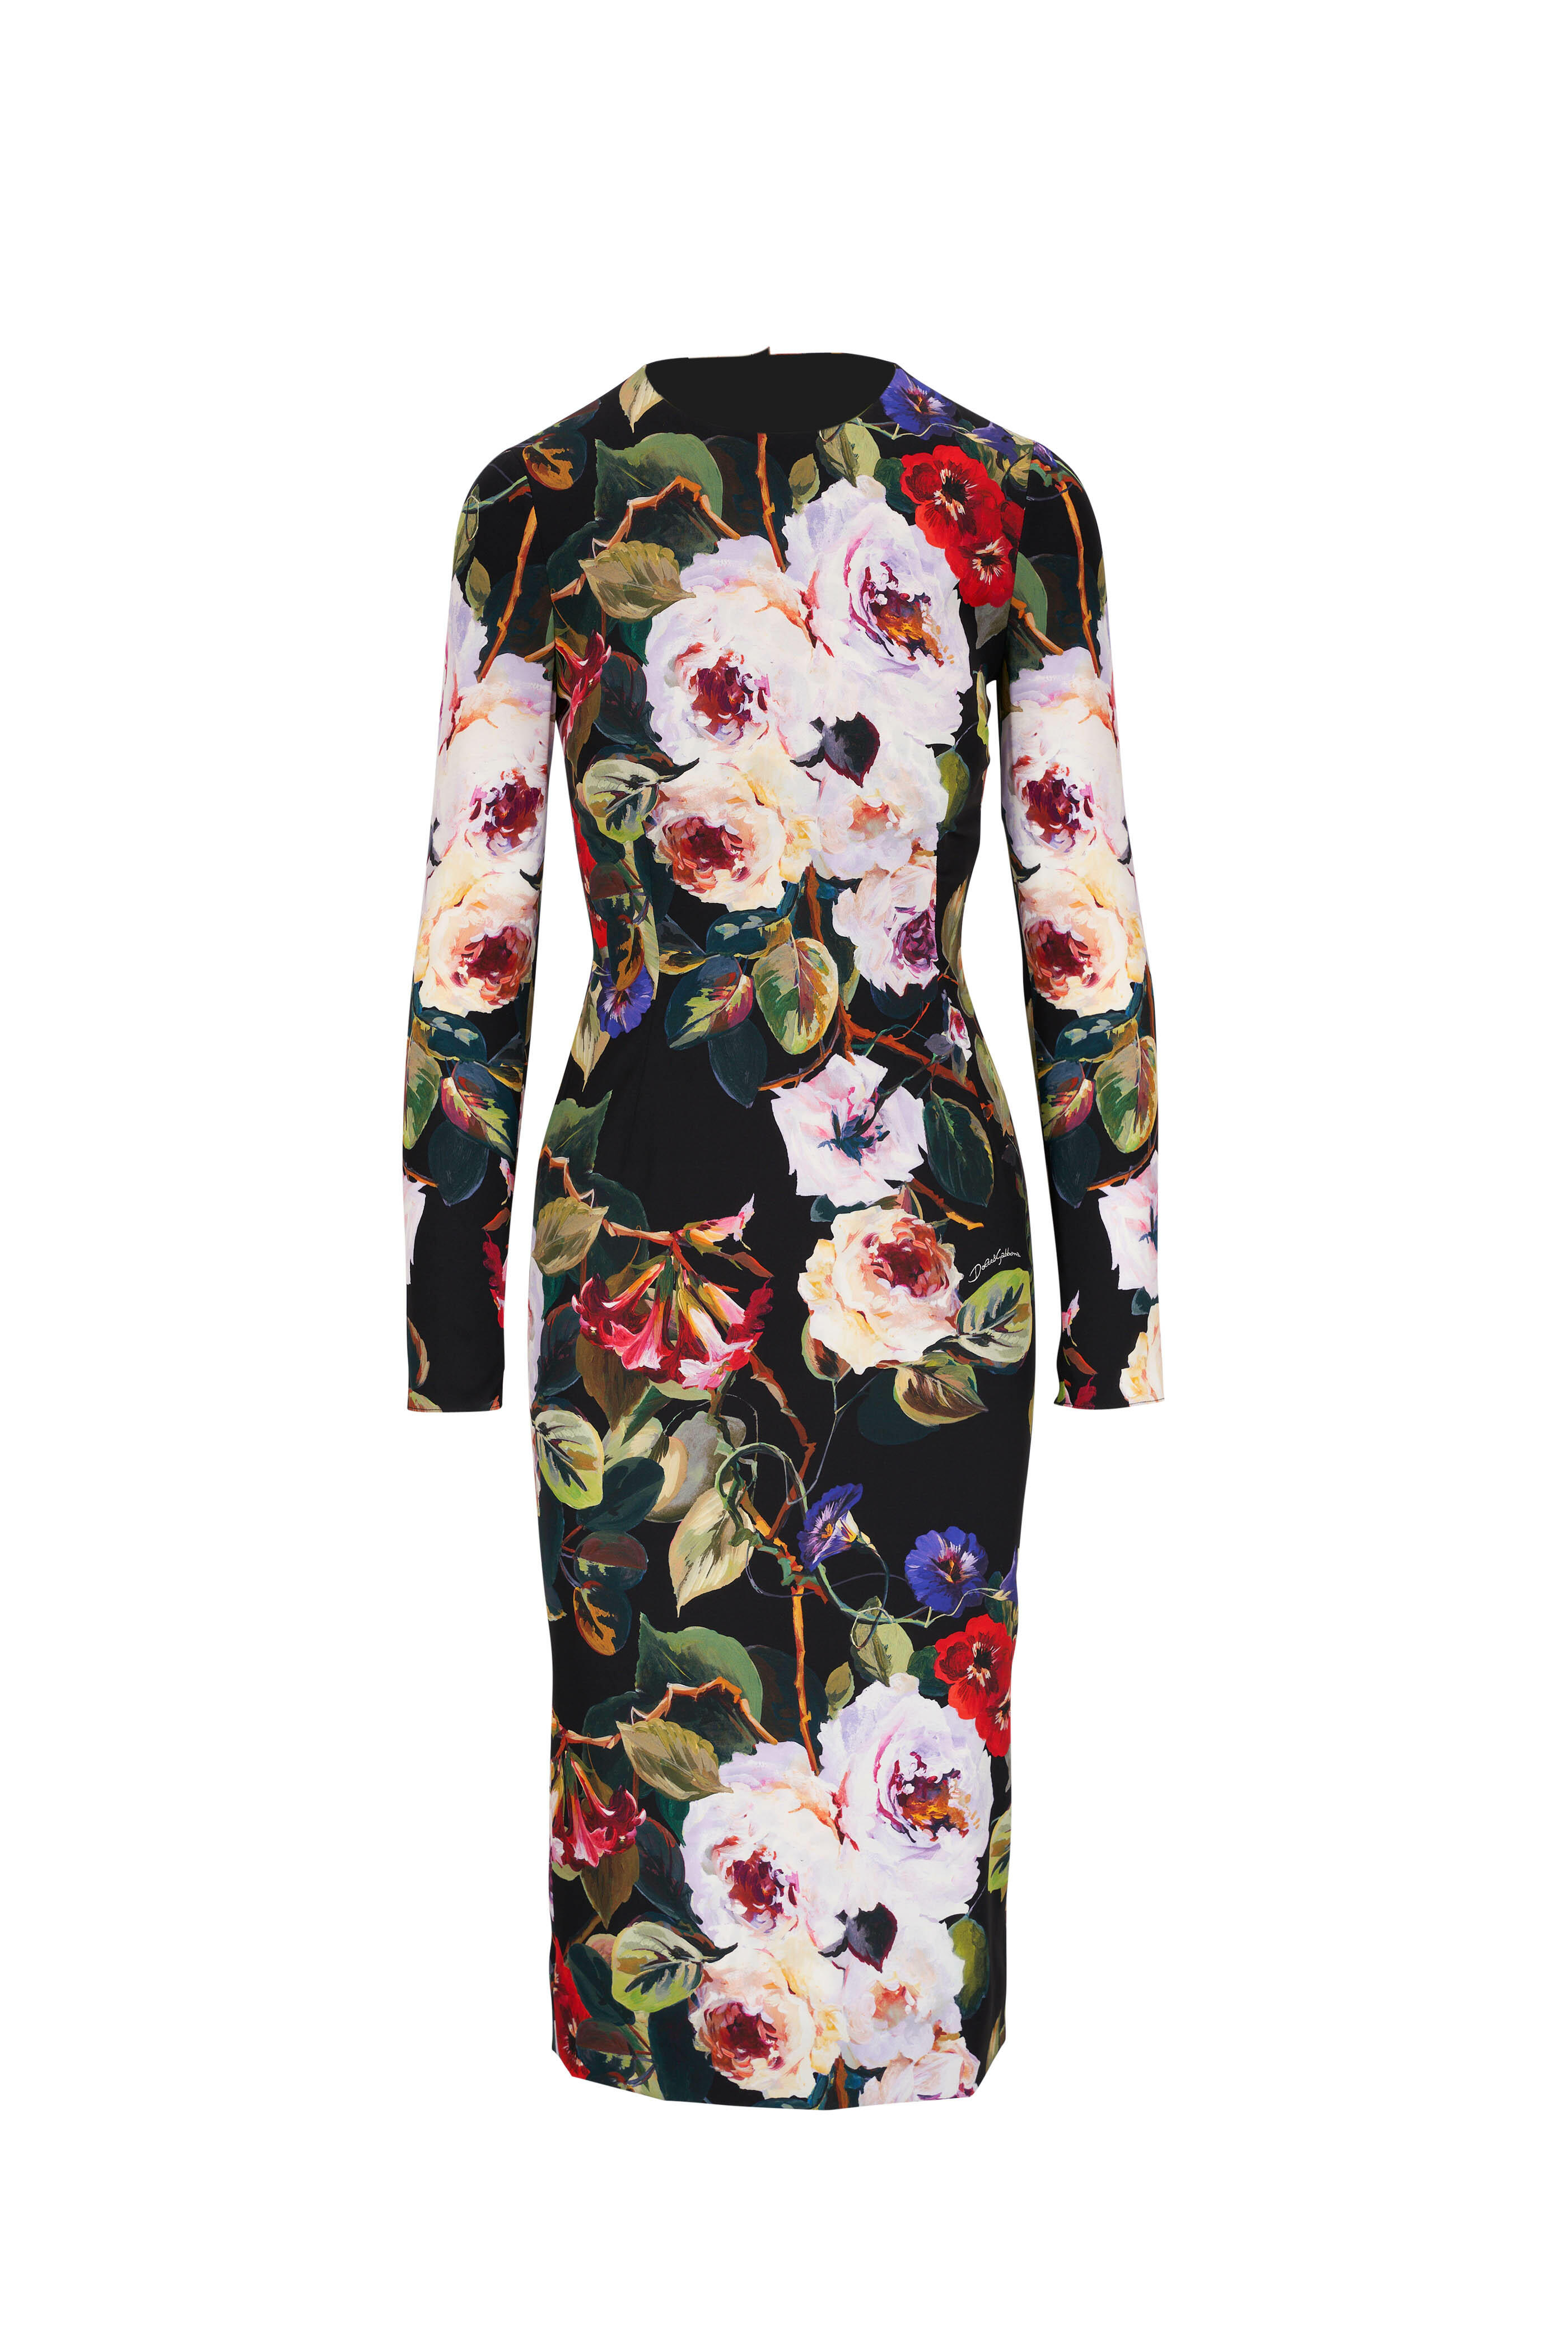 Dolce & Gabbana - Tubino Black Flower Printed Dress